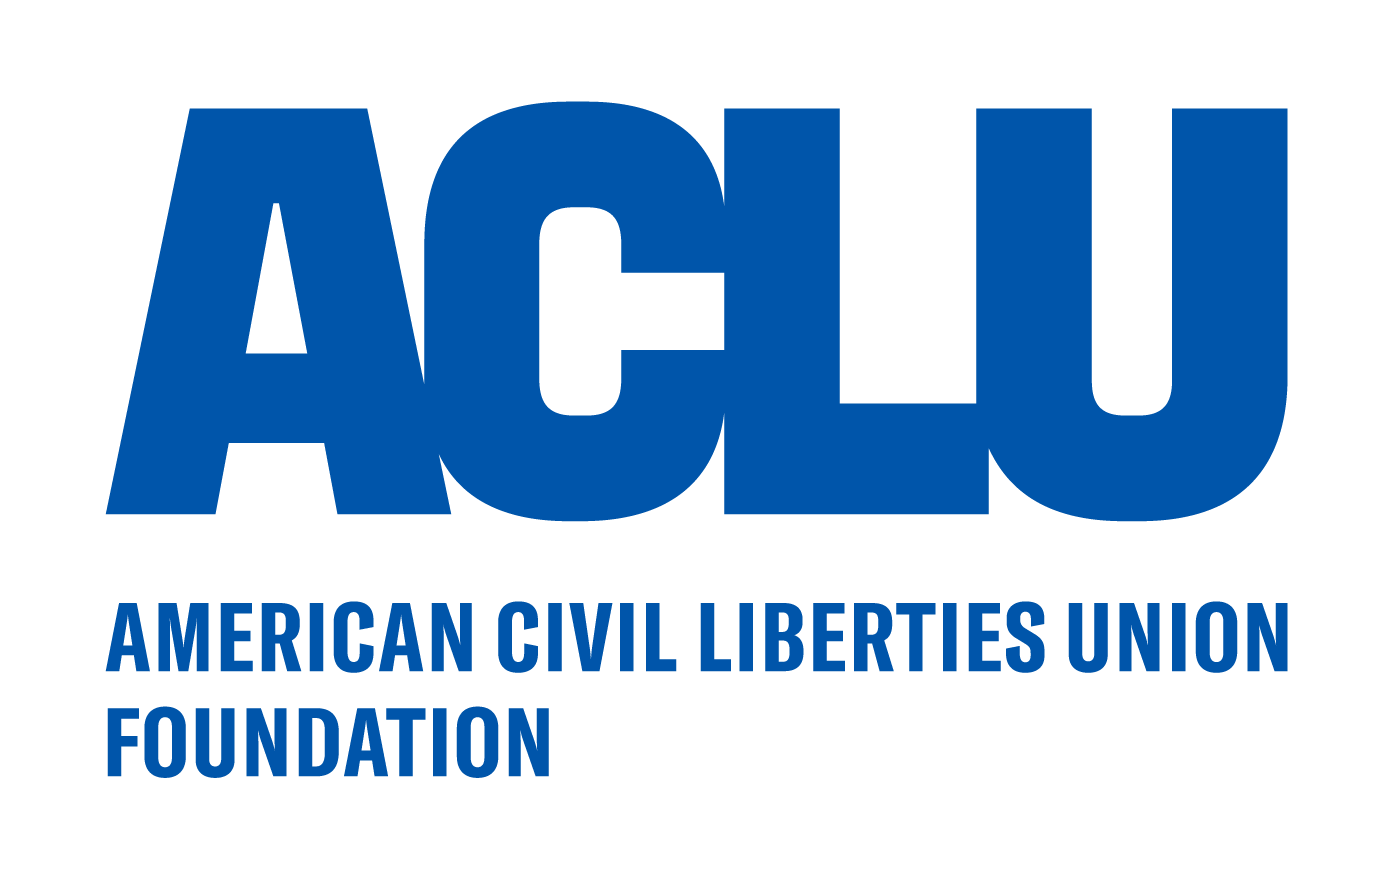 American Civil Liberties Union Foundation logo